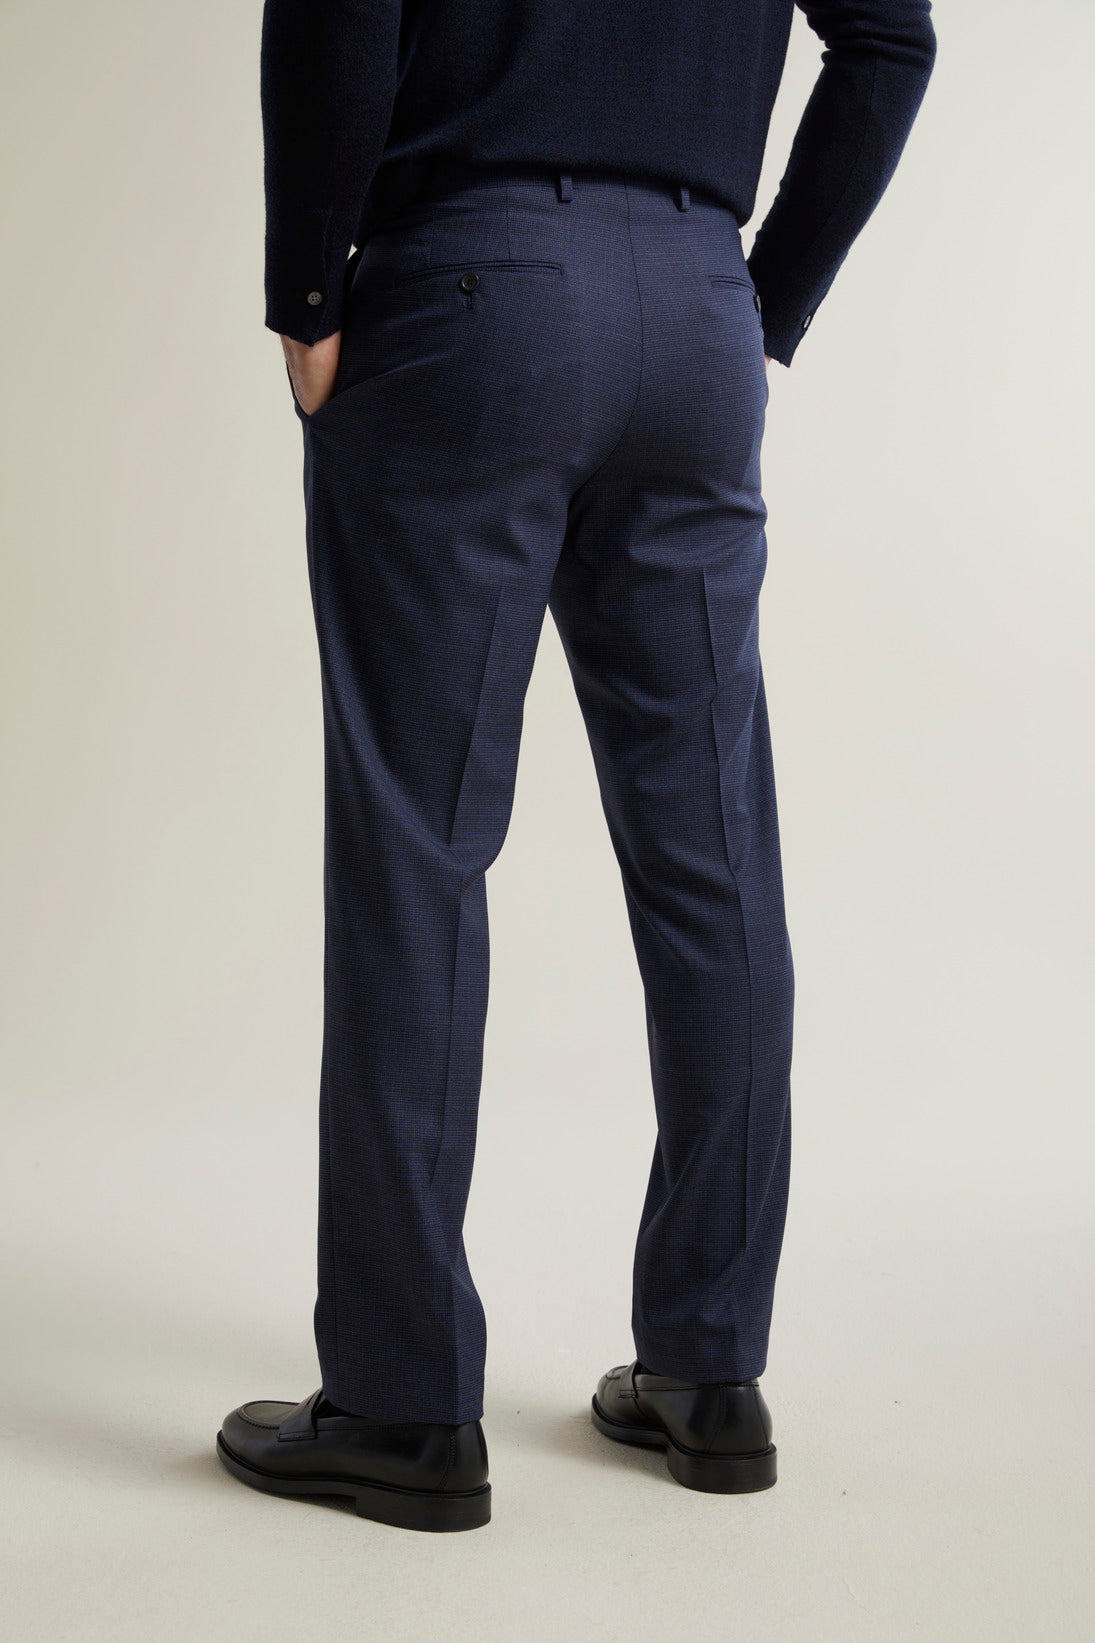 Eleluny Men's Formal Straight Leg Pants Office Smart Slim Fit Trousers  Bottoms Wine Red 4XL - Walmart.com